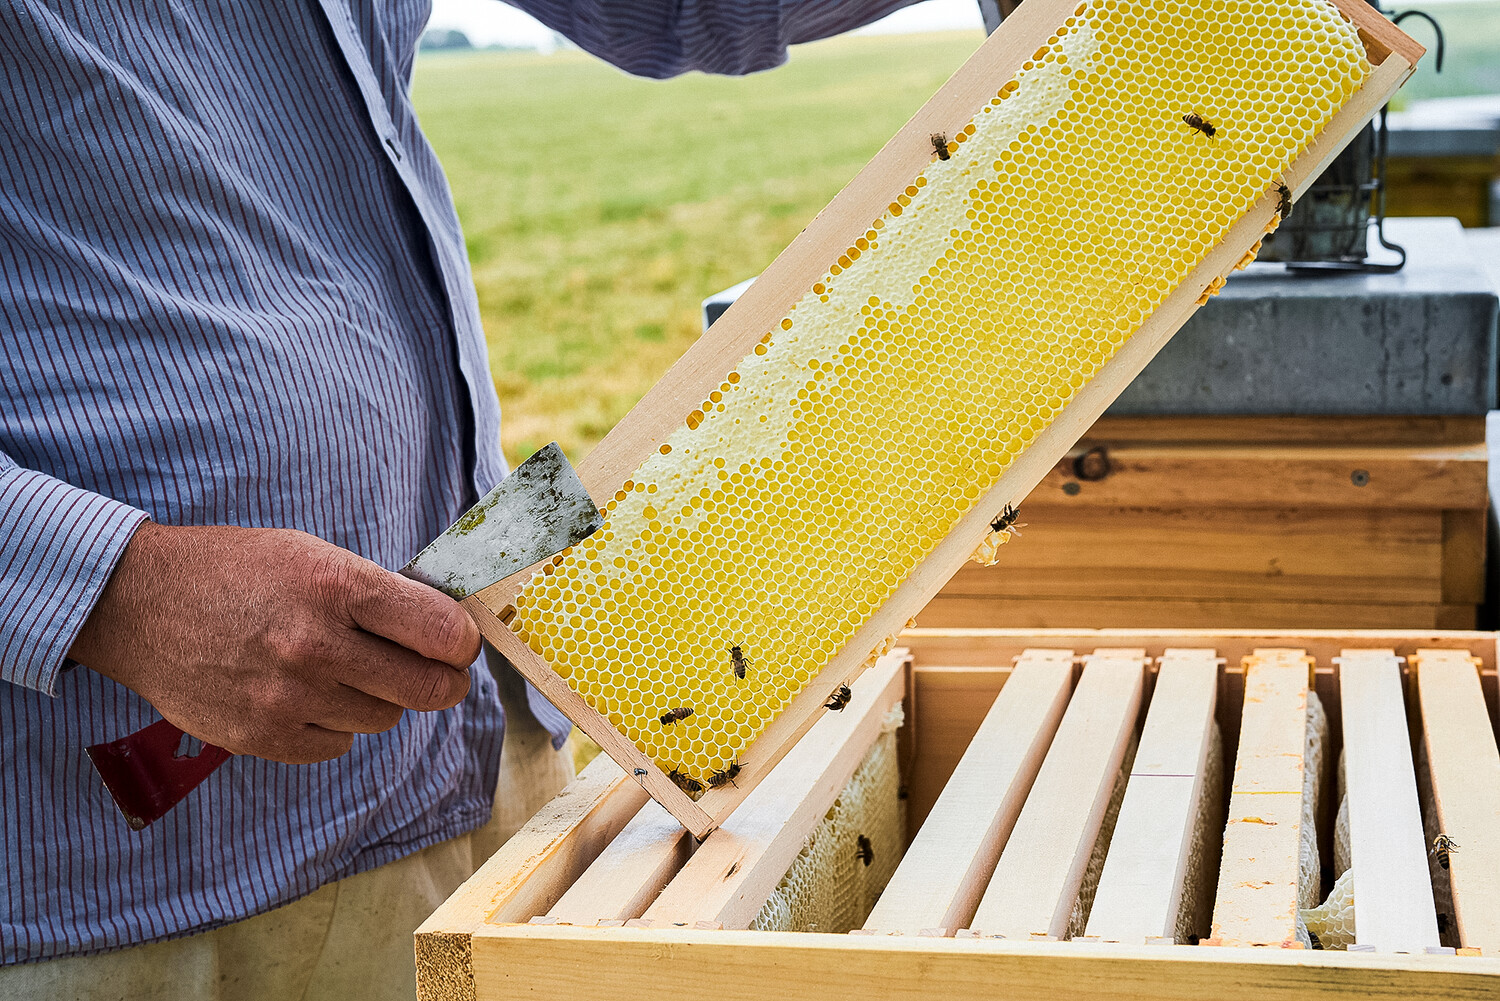 apiculteur et rucher